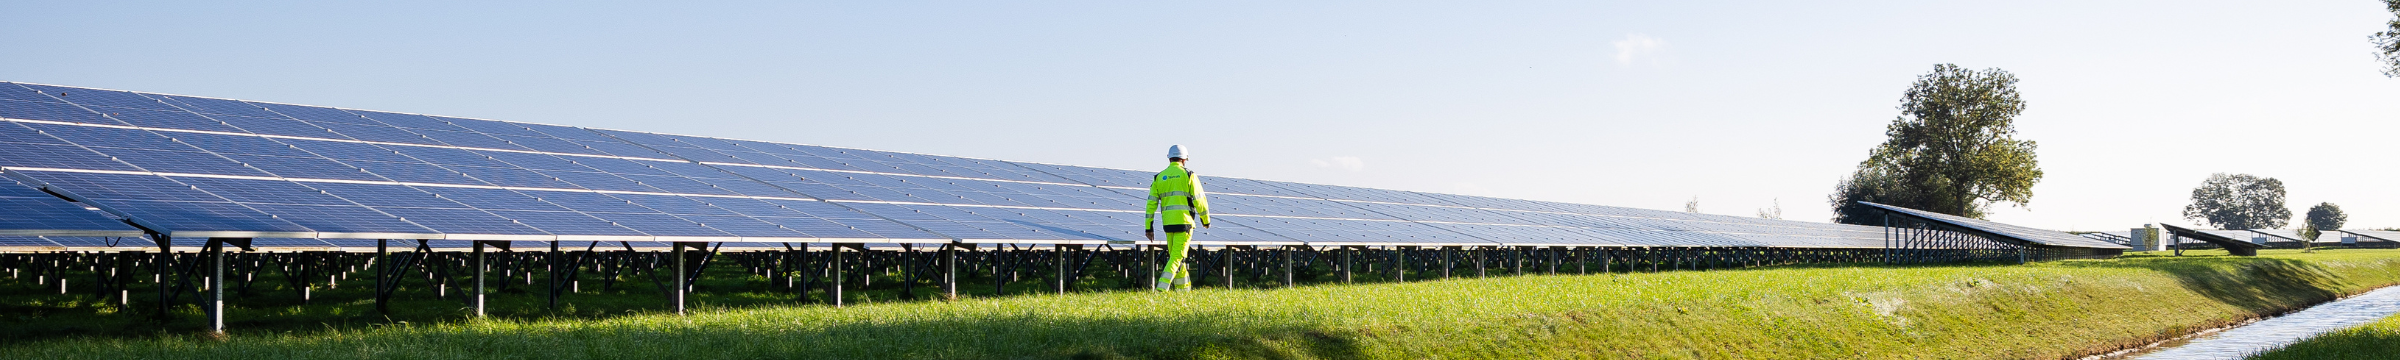 Man walking next to a solar panel